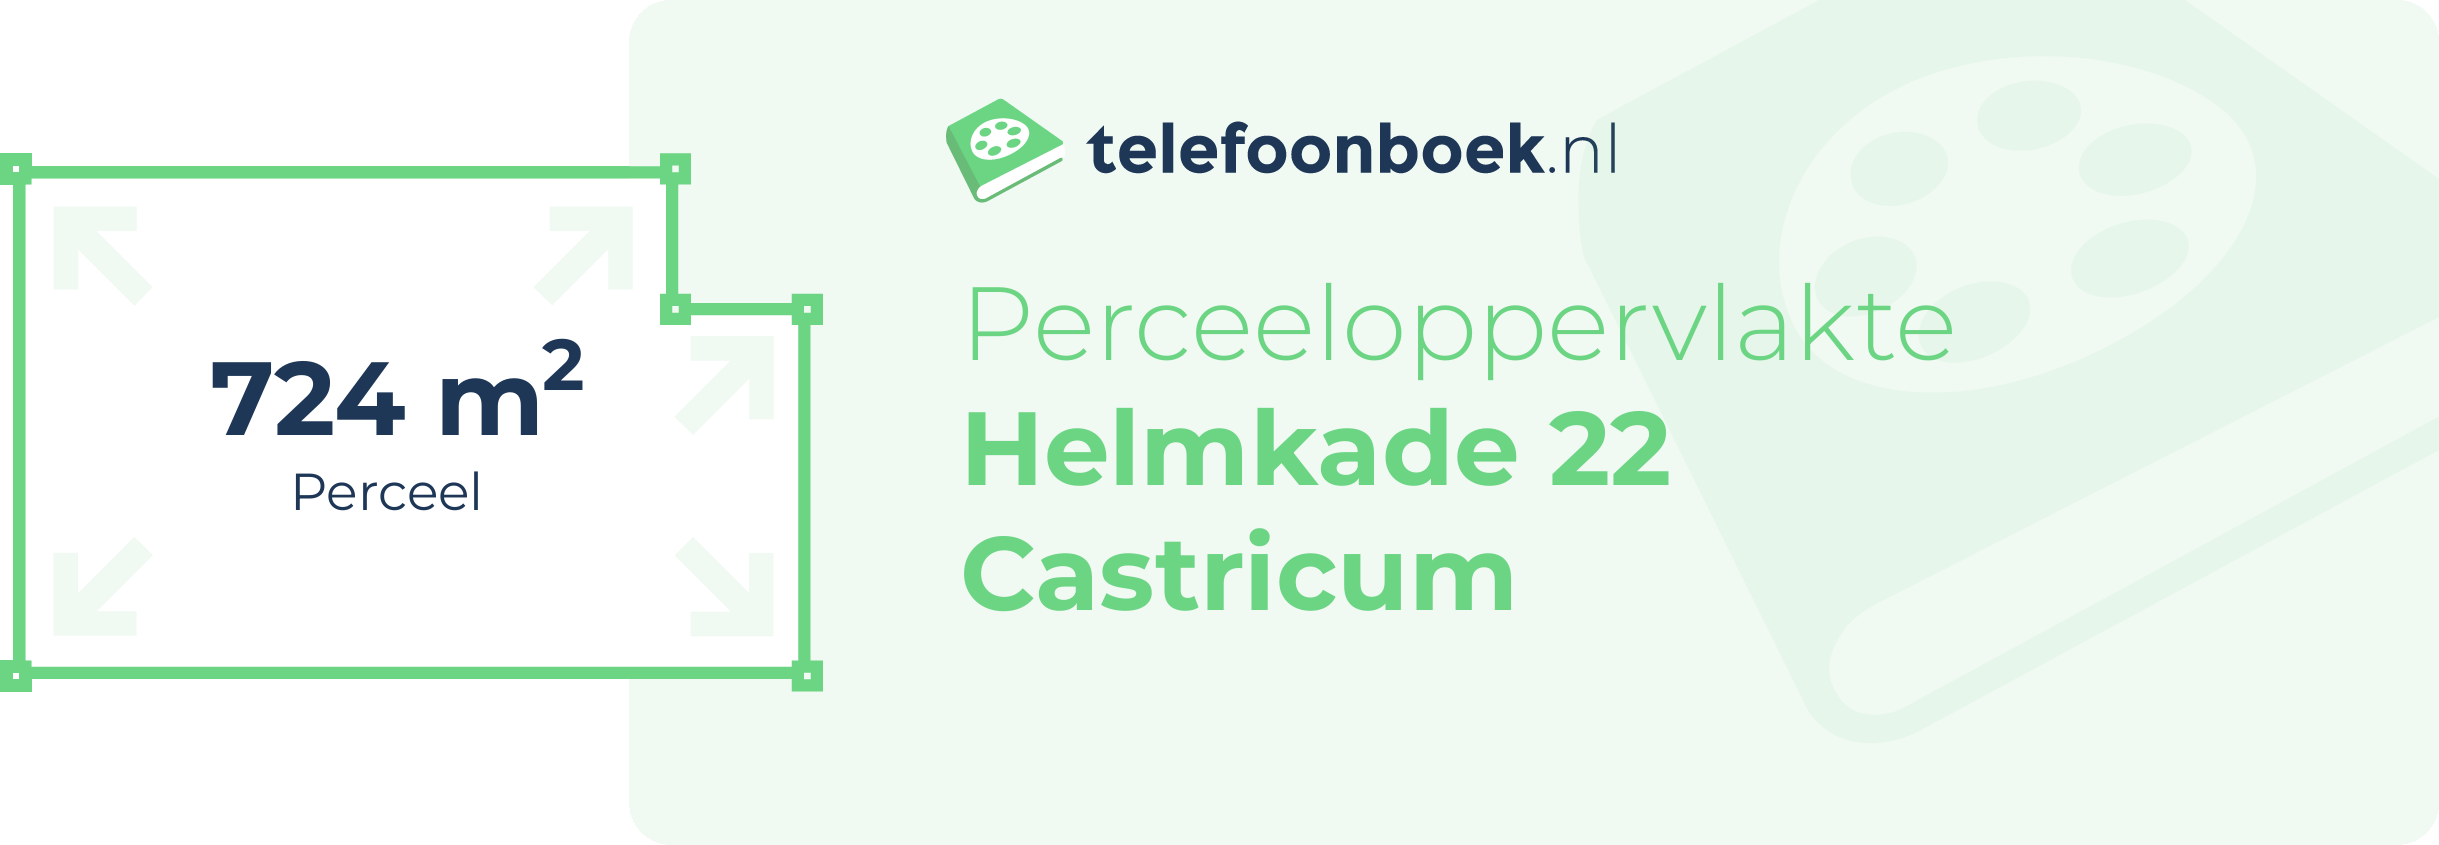 Perceeloppervlakte Helmkade 22 Castricum